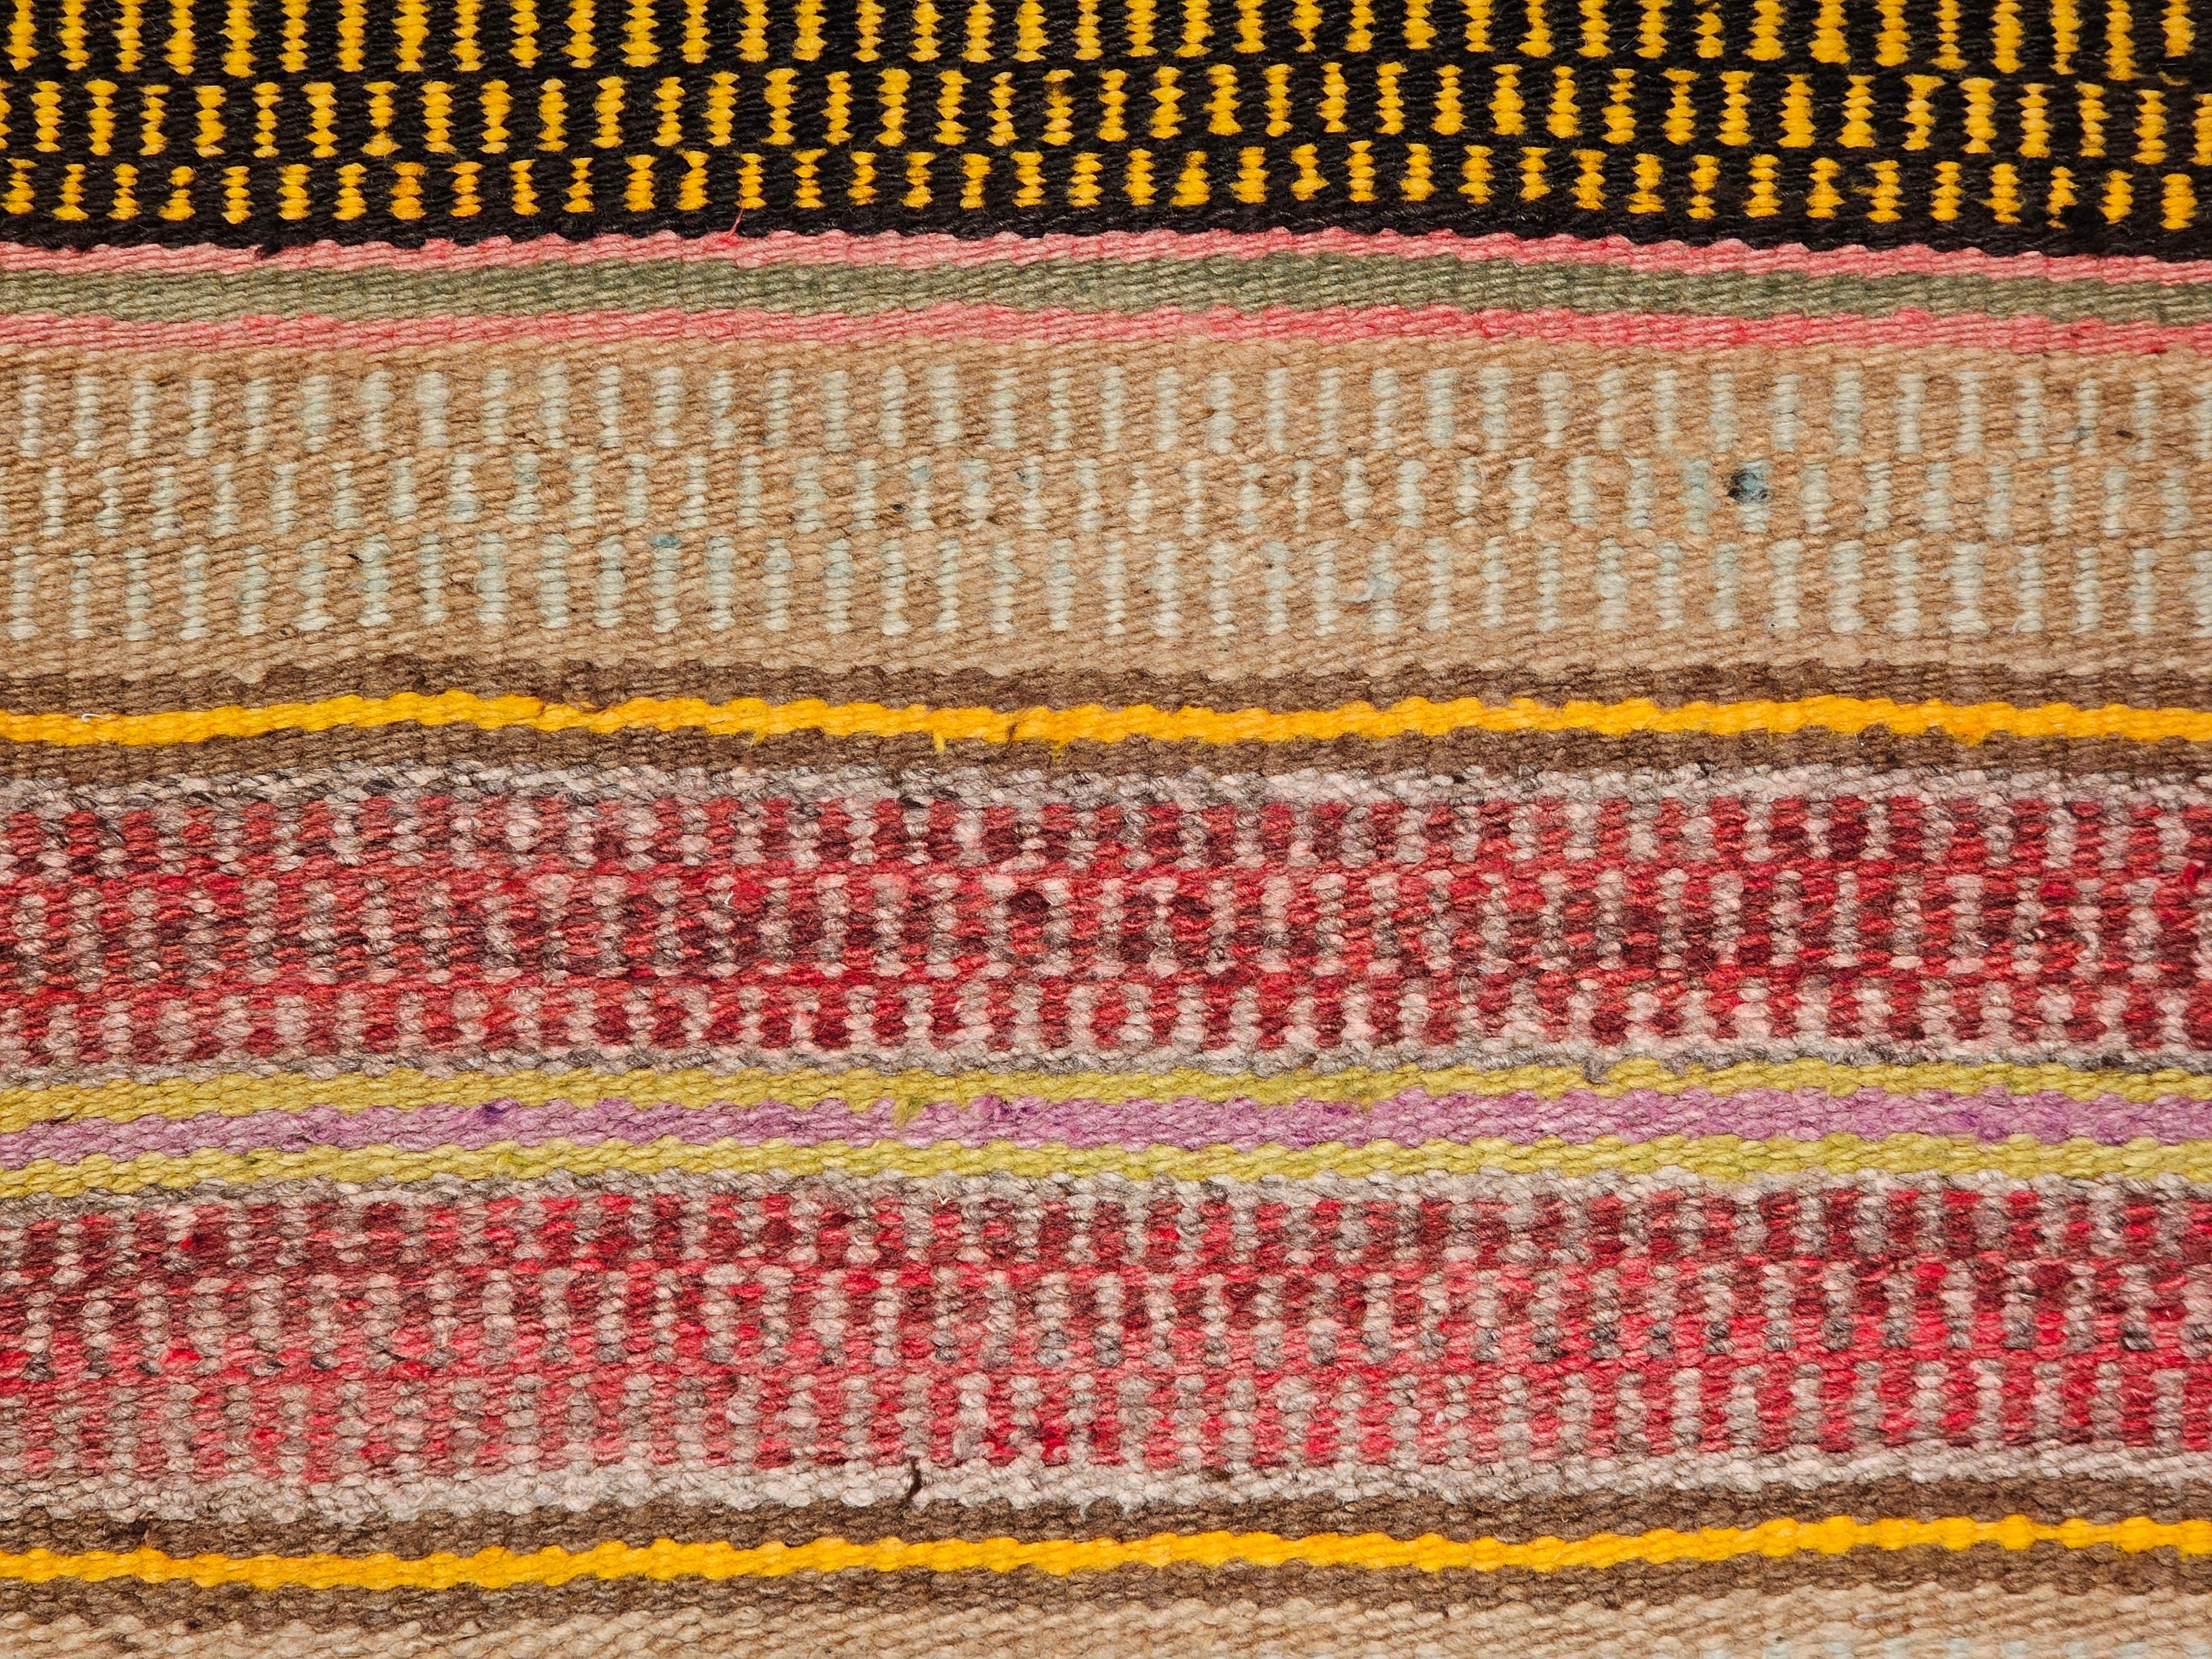 American Vintage Navajo Saddle Blanket in Wide Bands Pattern in Red, Brown, Caramel  For Sale